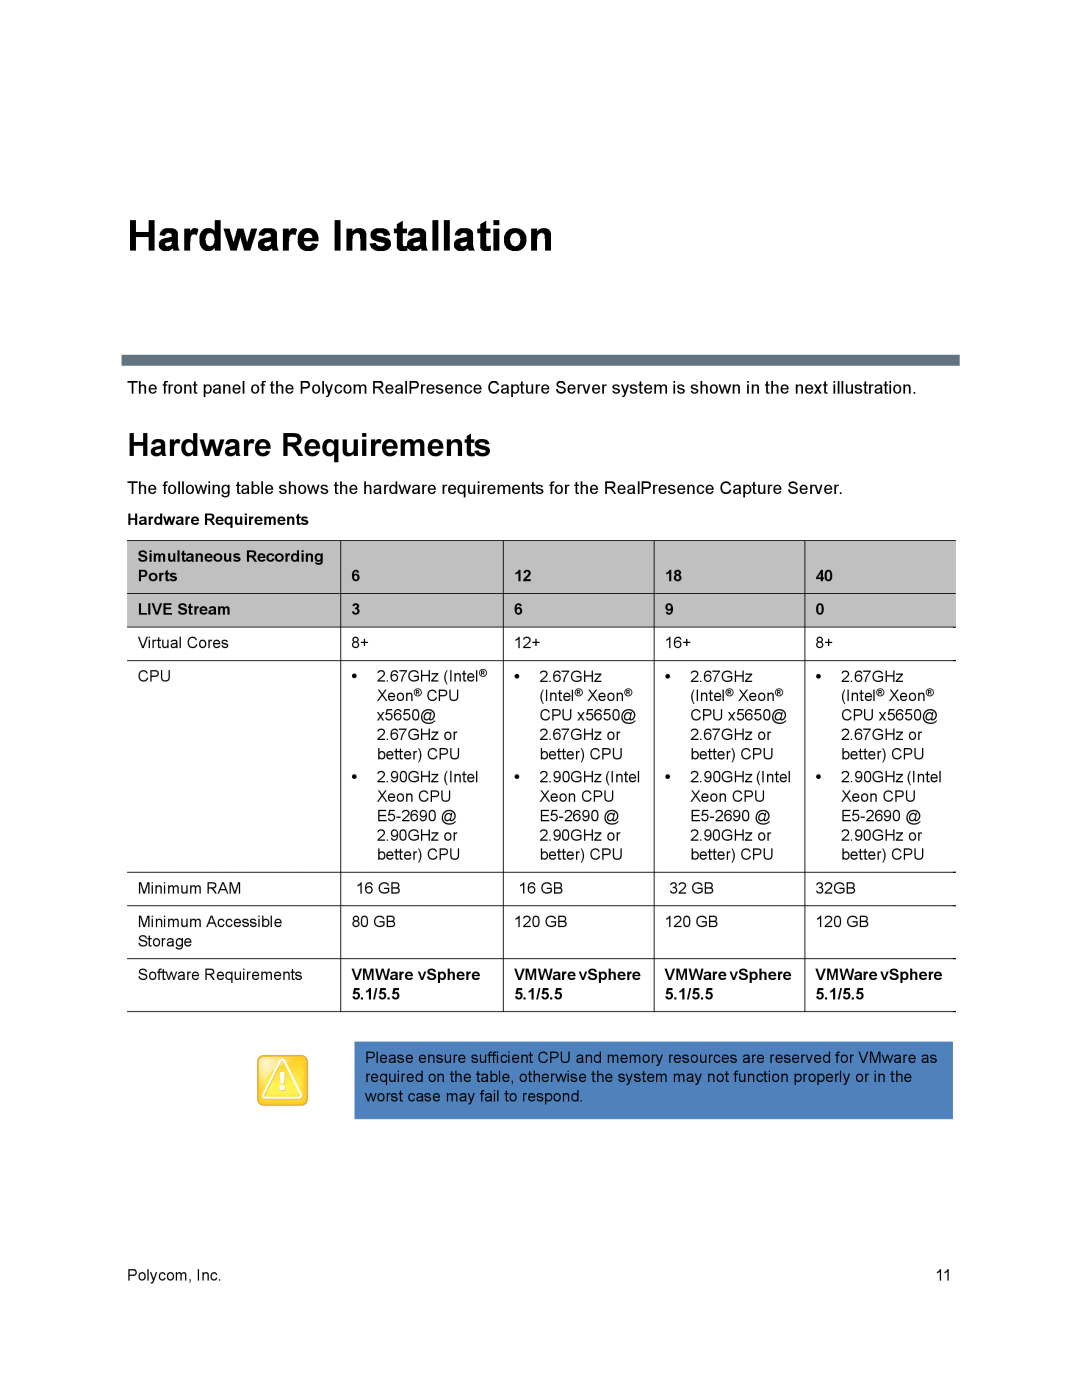 Polycom 40/0 manual Hardware Installation, Hardware Requirements 